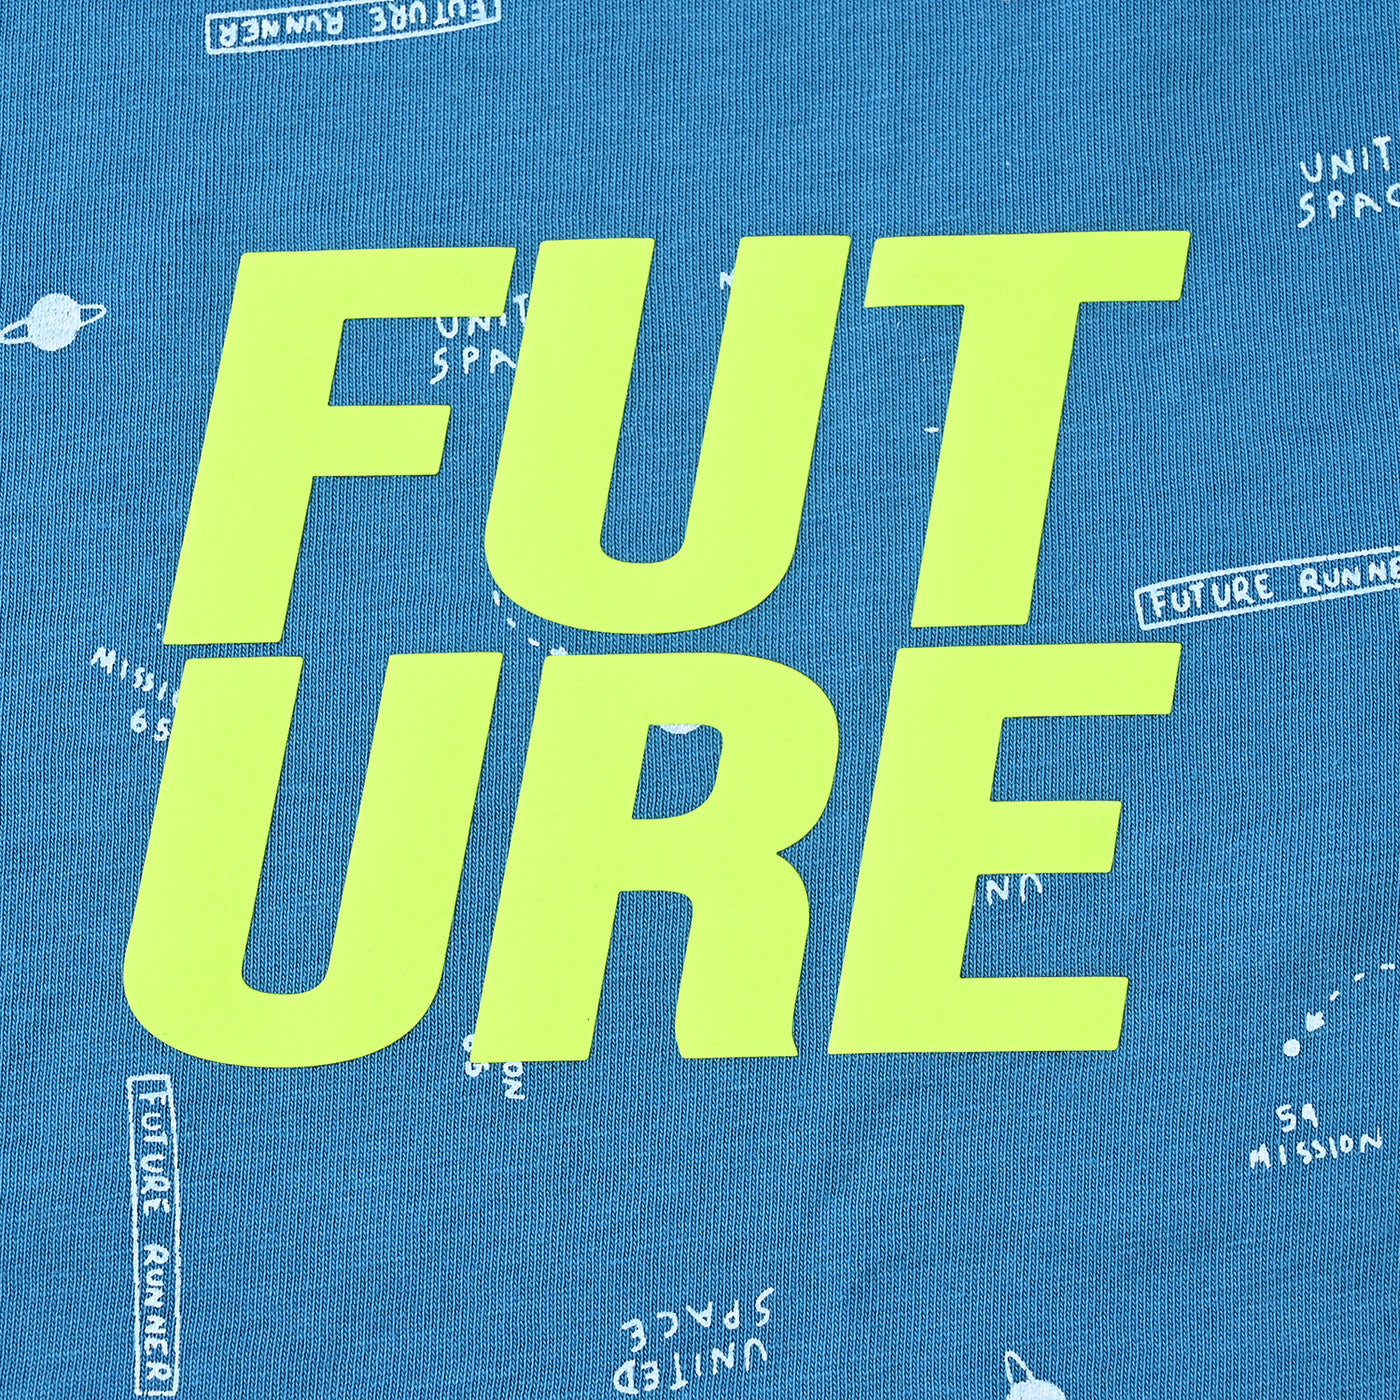 Boys Cotton Jersey T-Shirt H/S Future-Fjord Blue